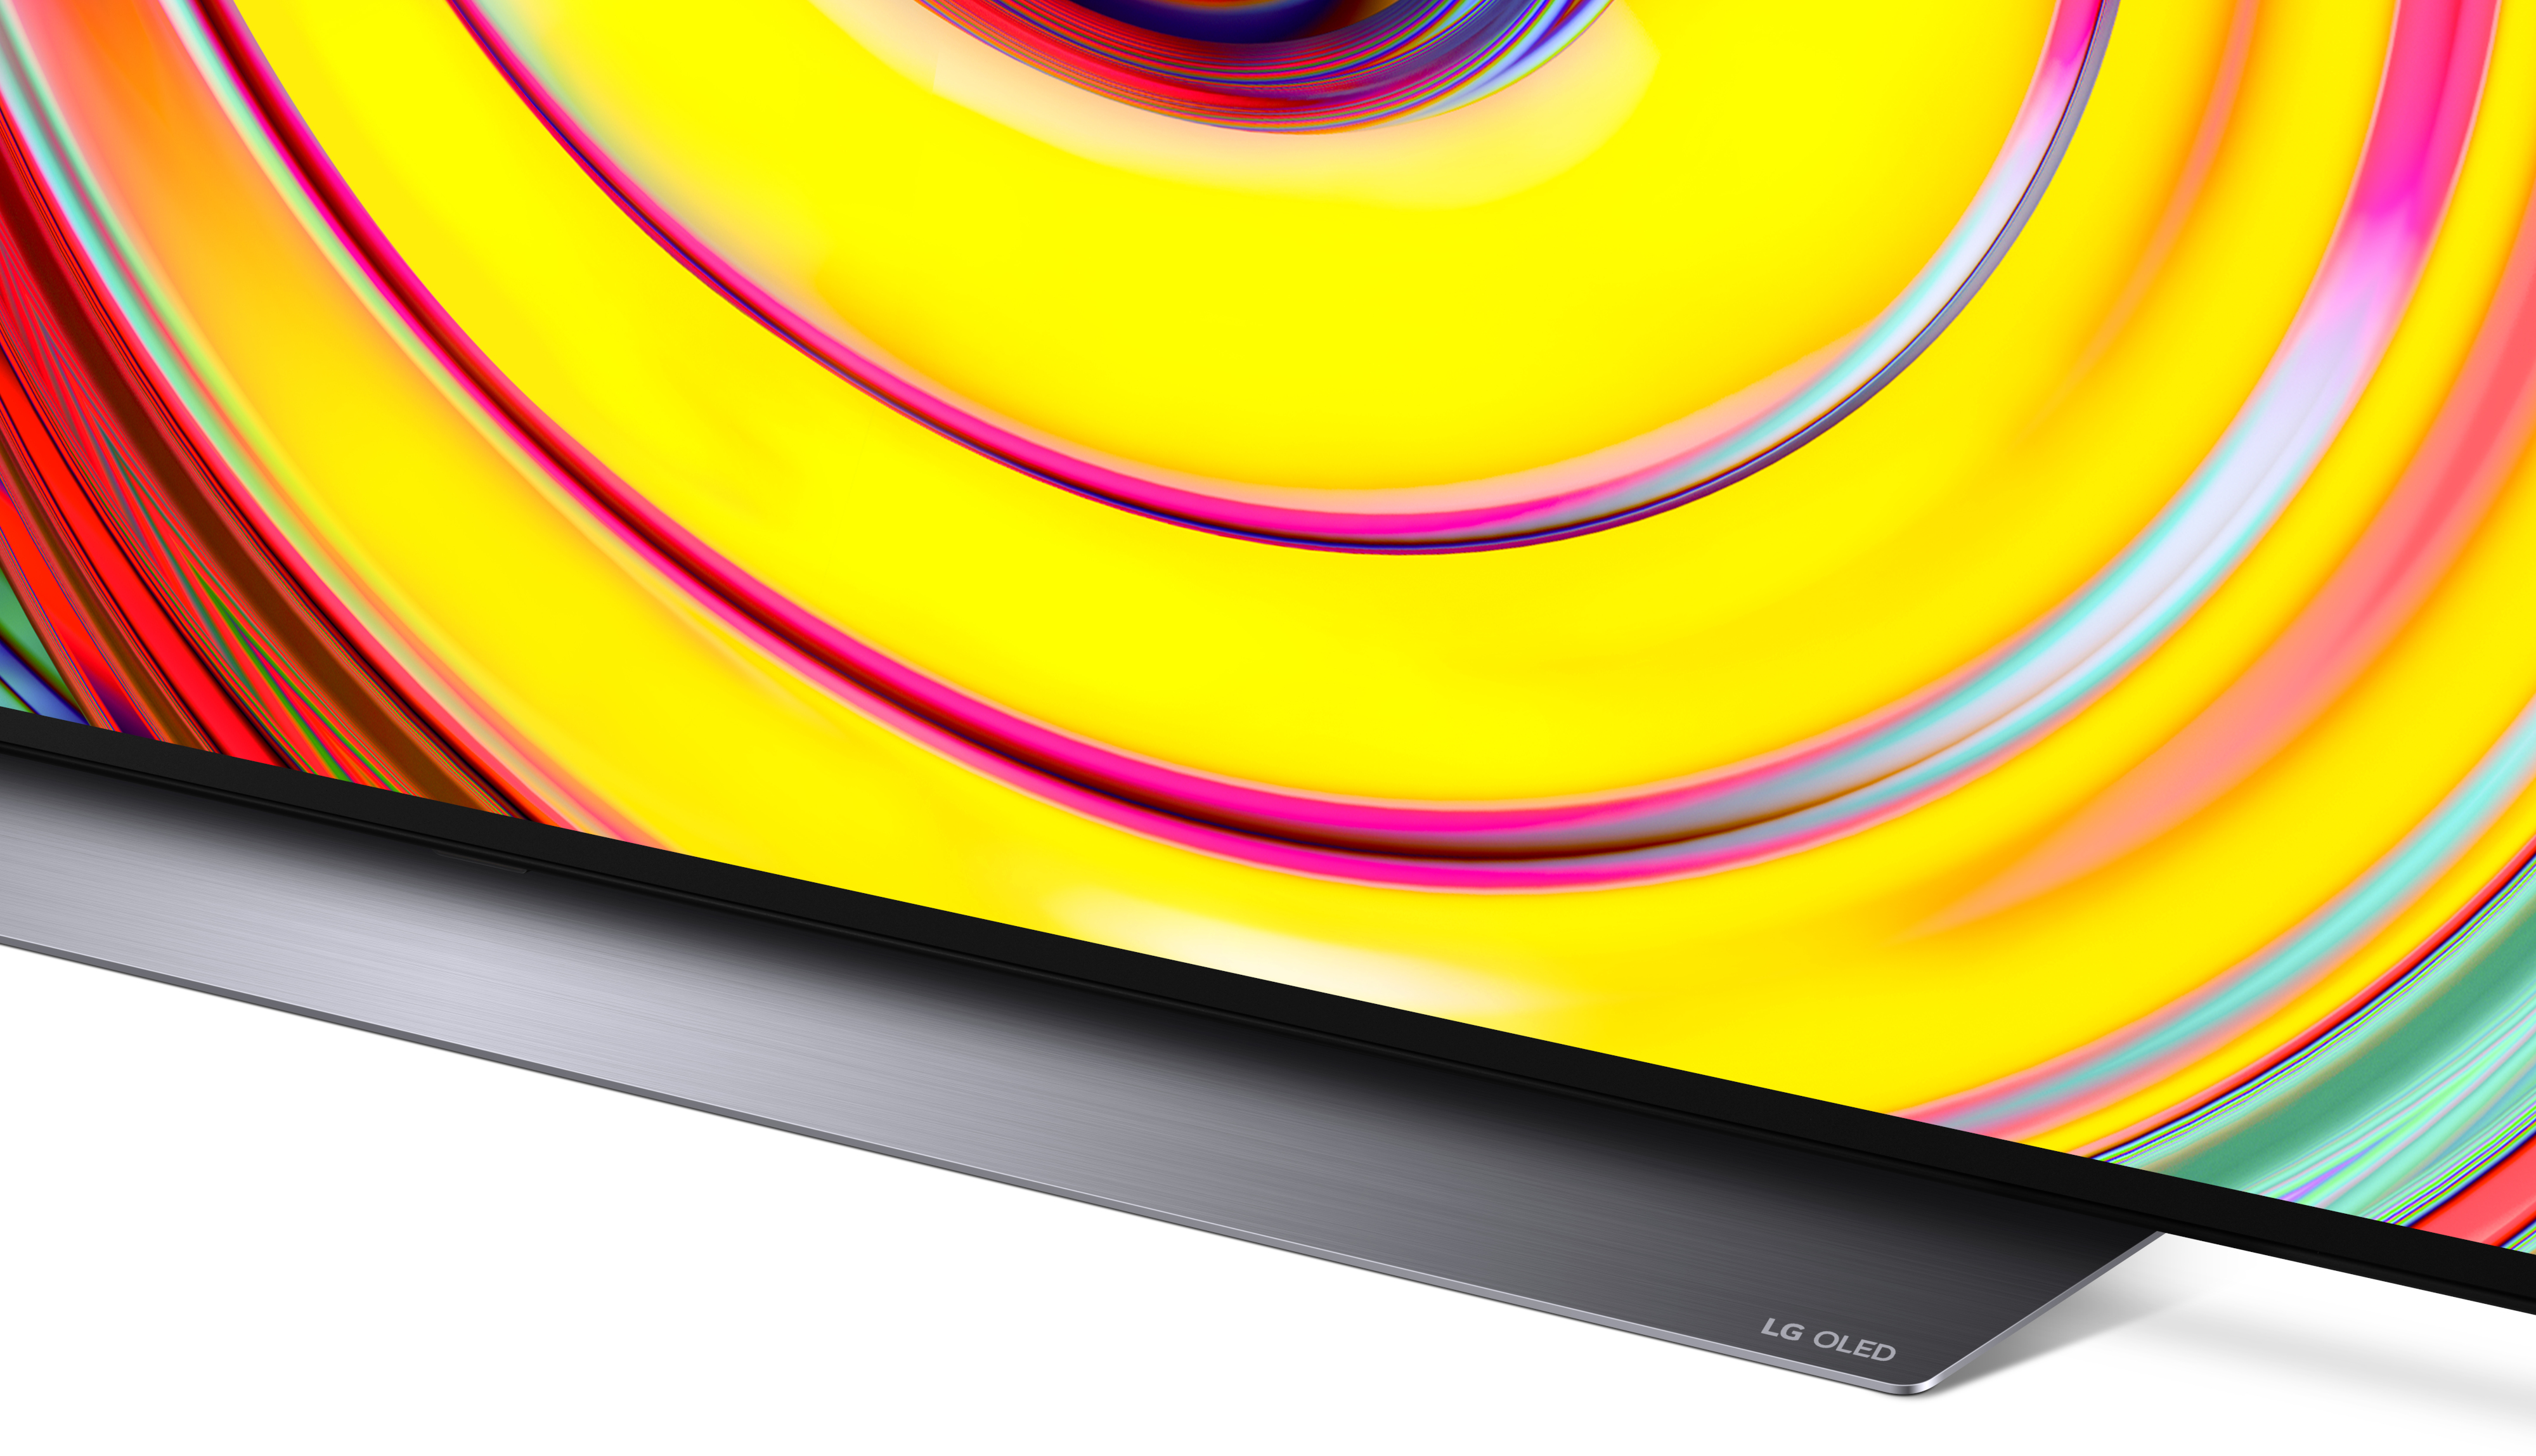 LG OLED77CS9LA OLED TV mit TV, cm, 77 Zoll / 195 UHD (Flat, 4K, LG SMART 22 webOS ThinQ)